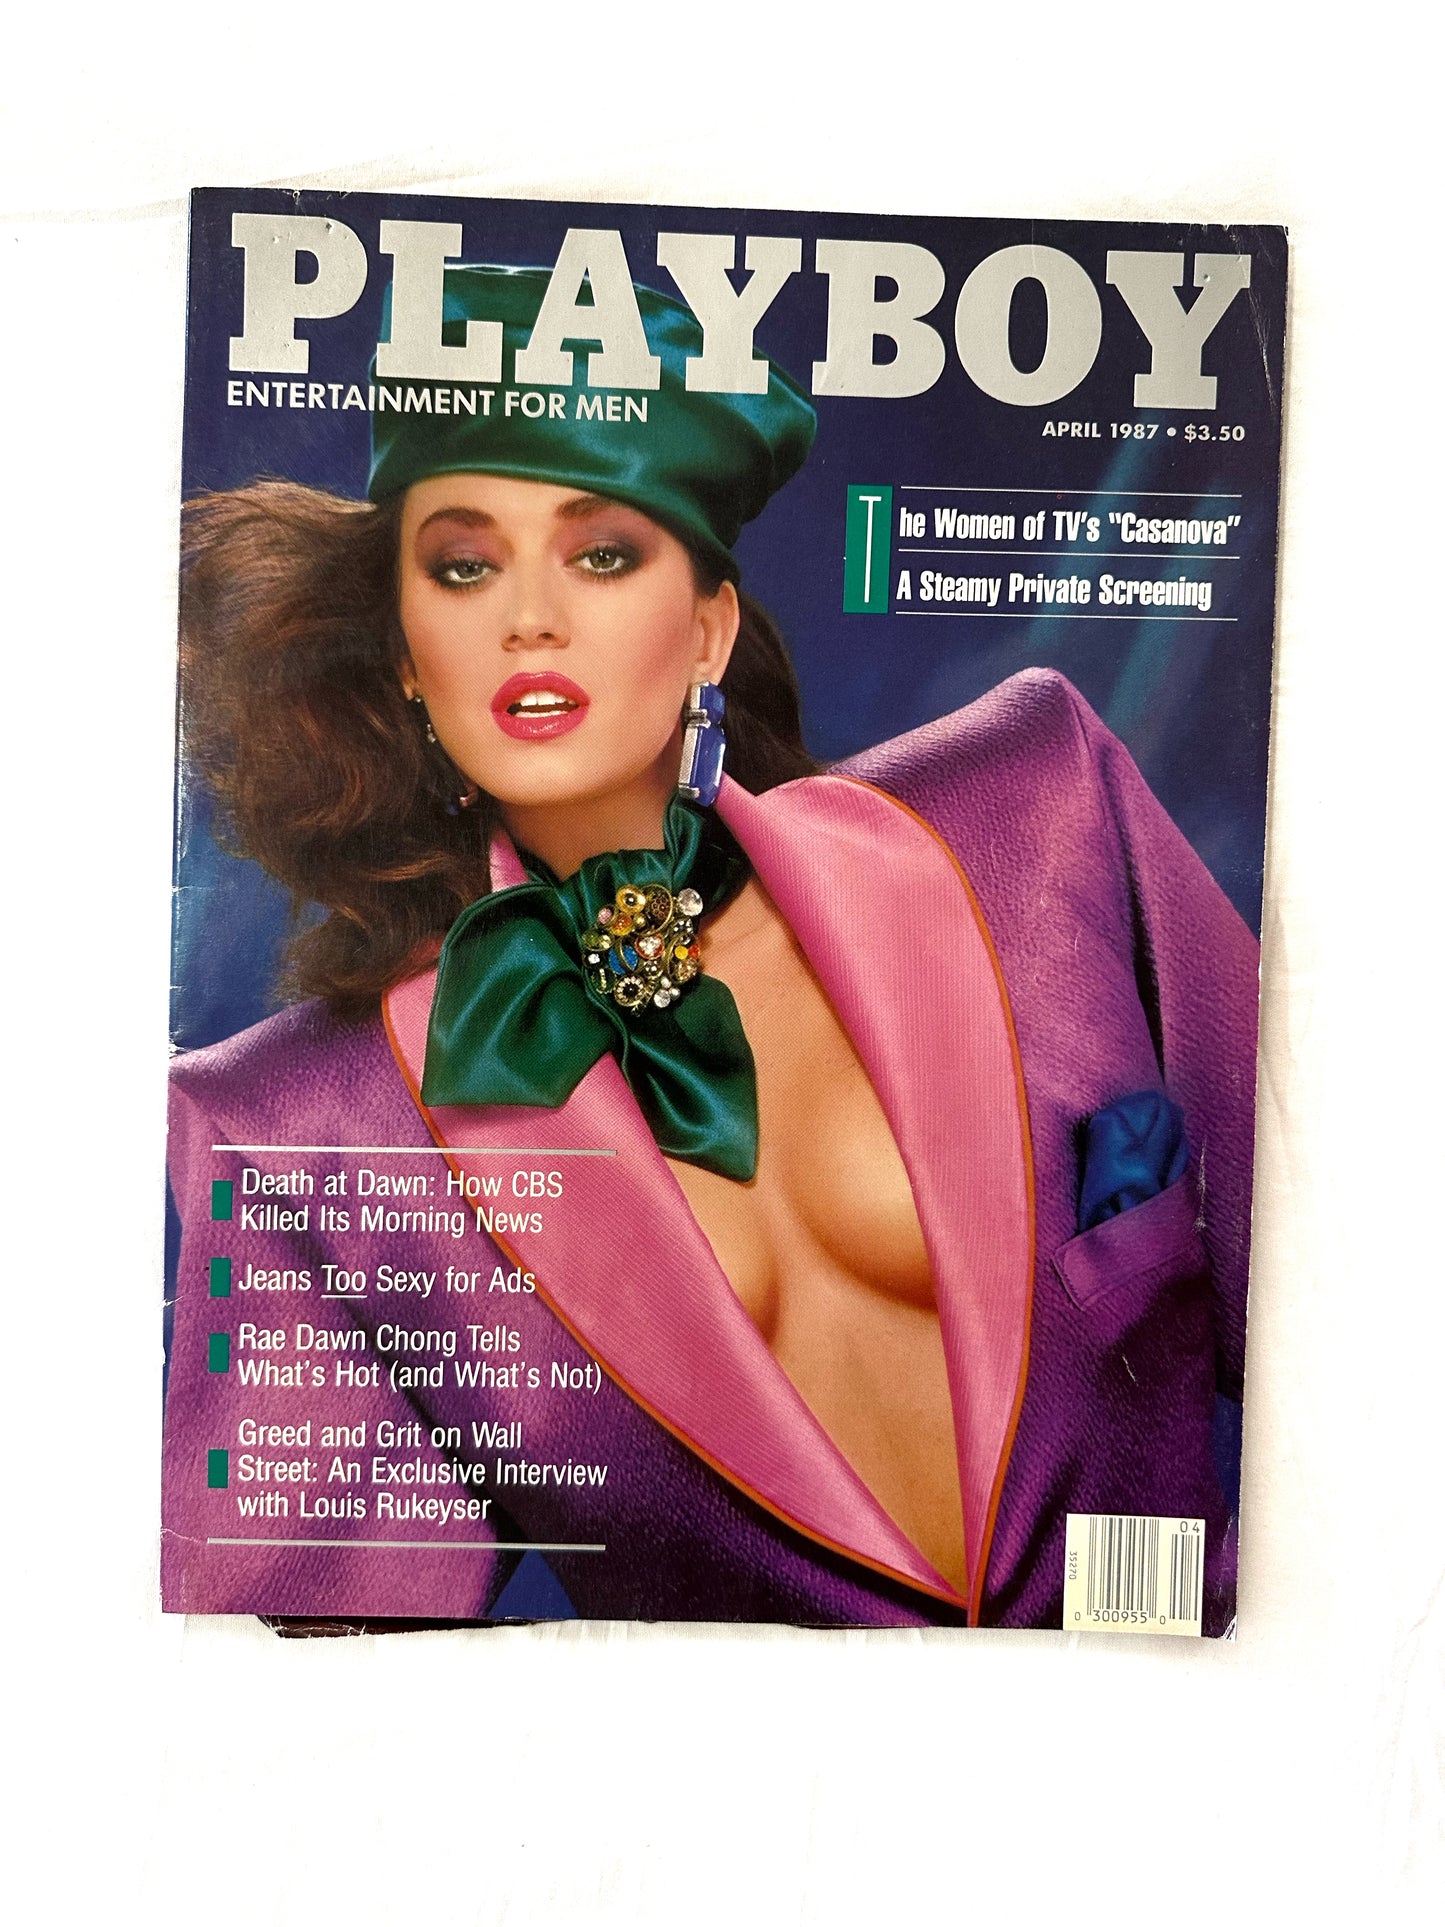 Playboy, April 1987